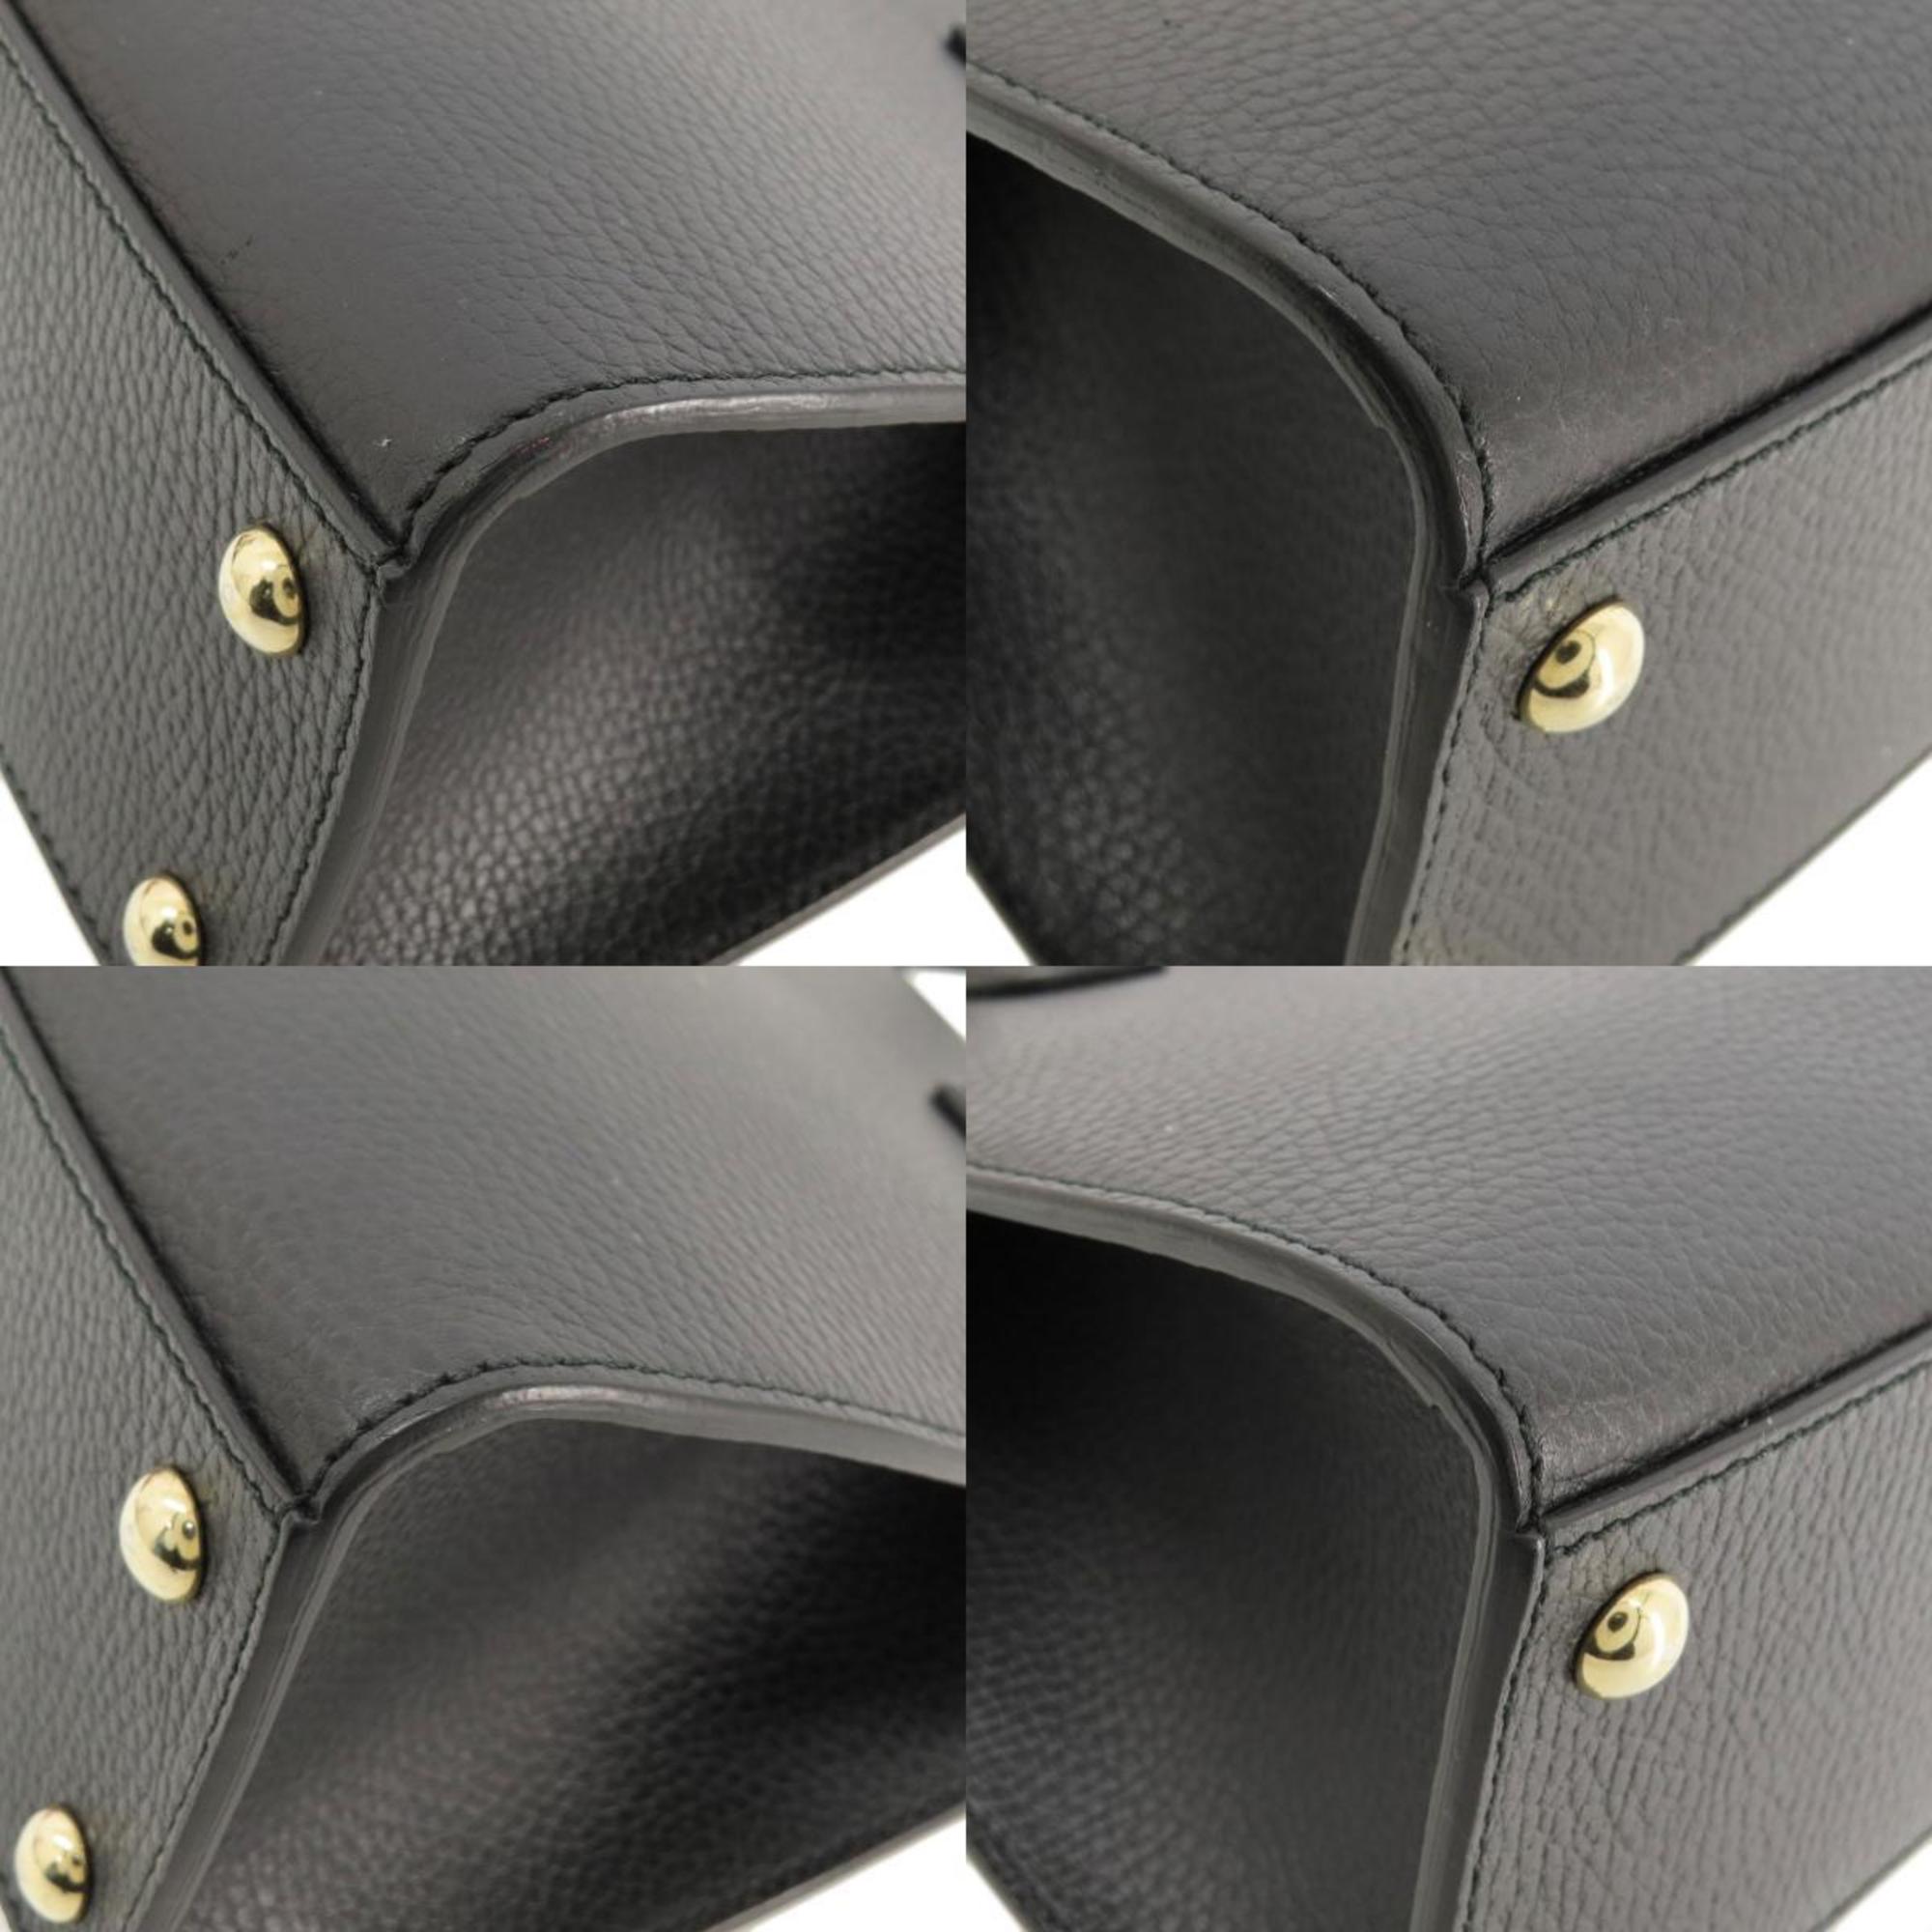 Gucci 431571 Interlocking G Handbag Leather Women's